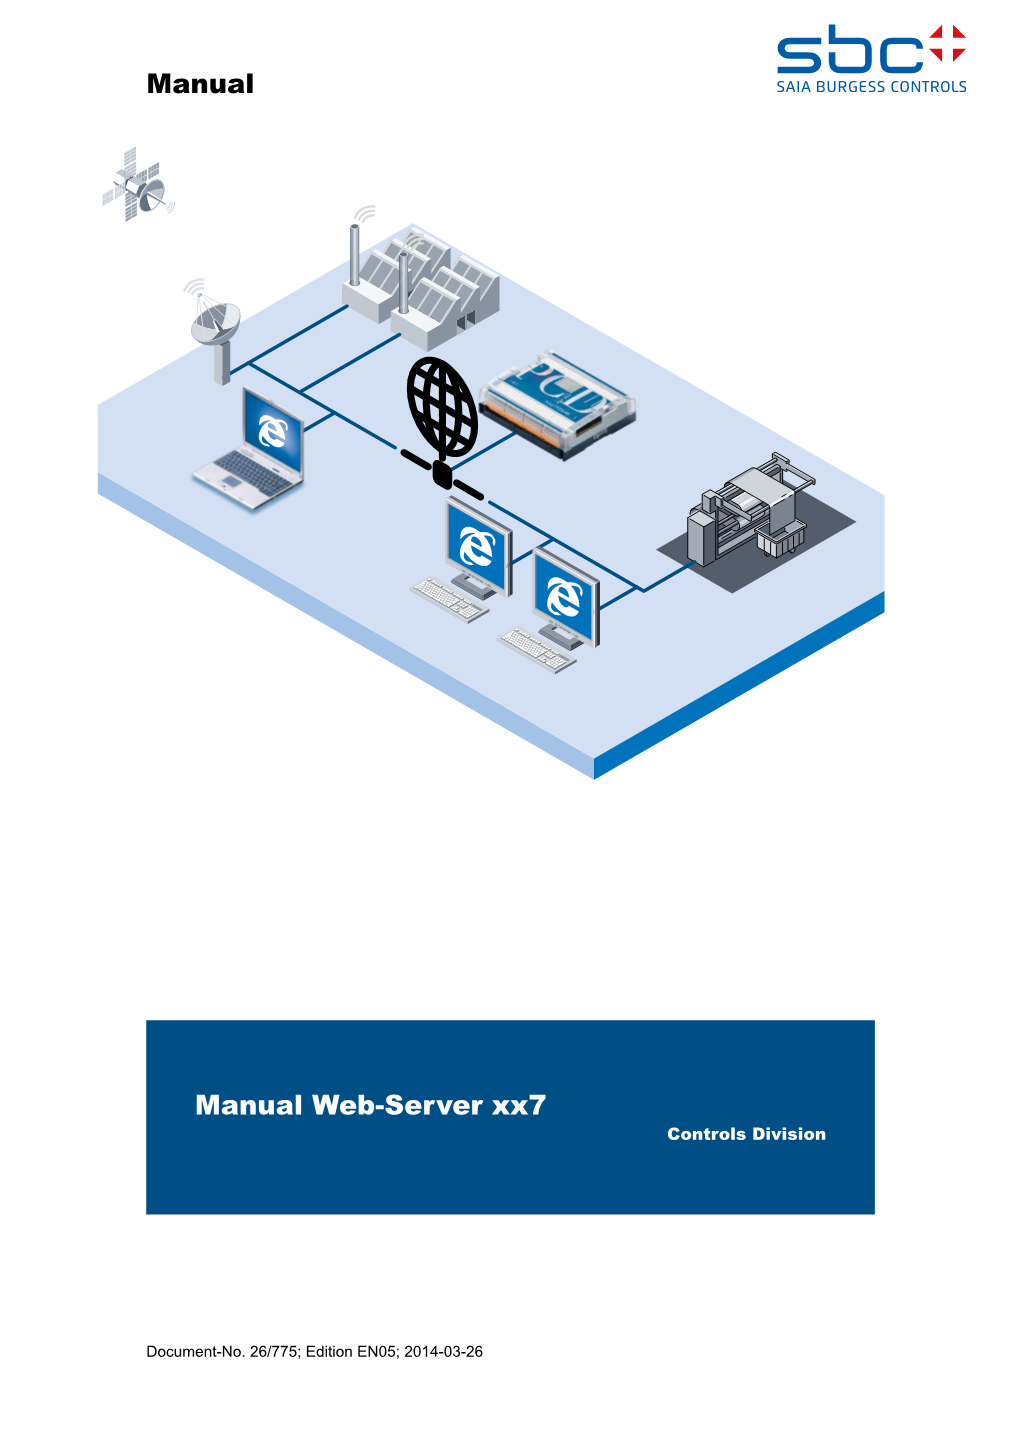 Manual Manual Web-Server